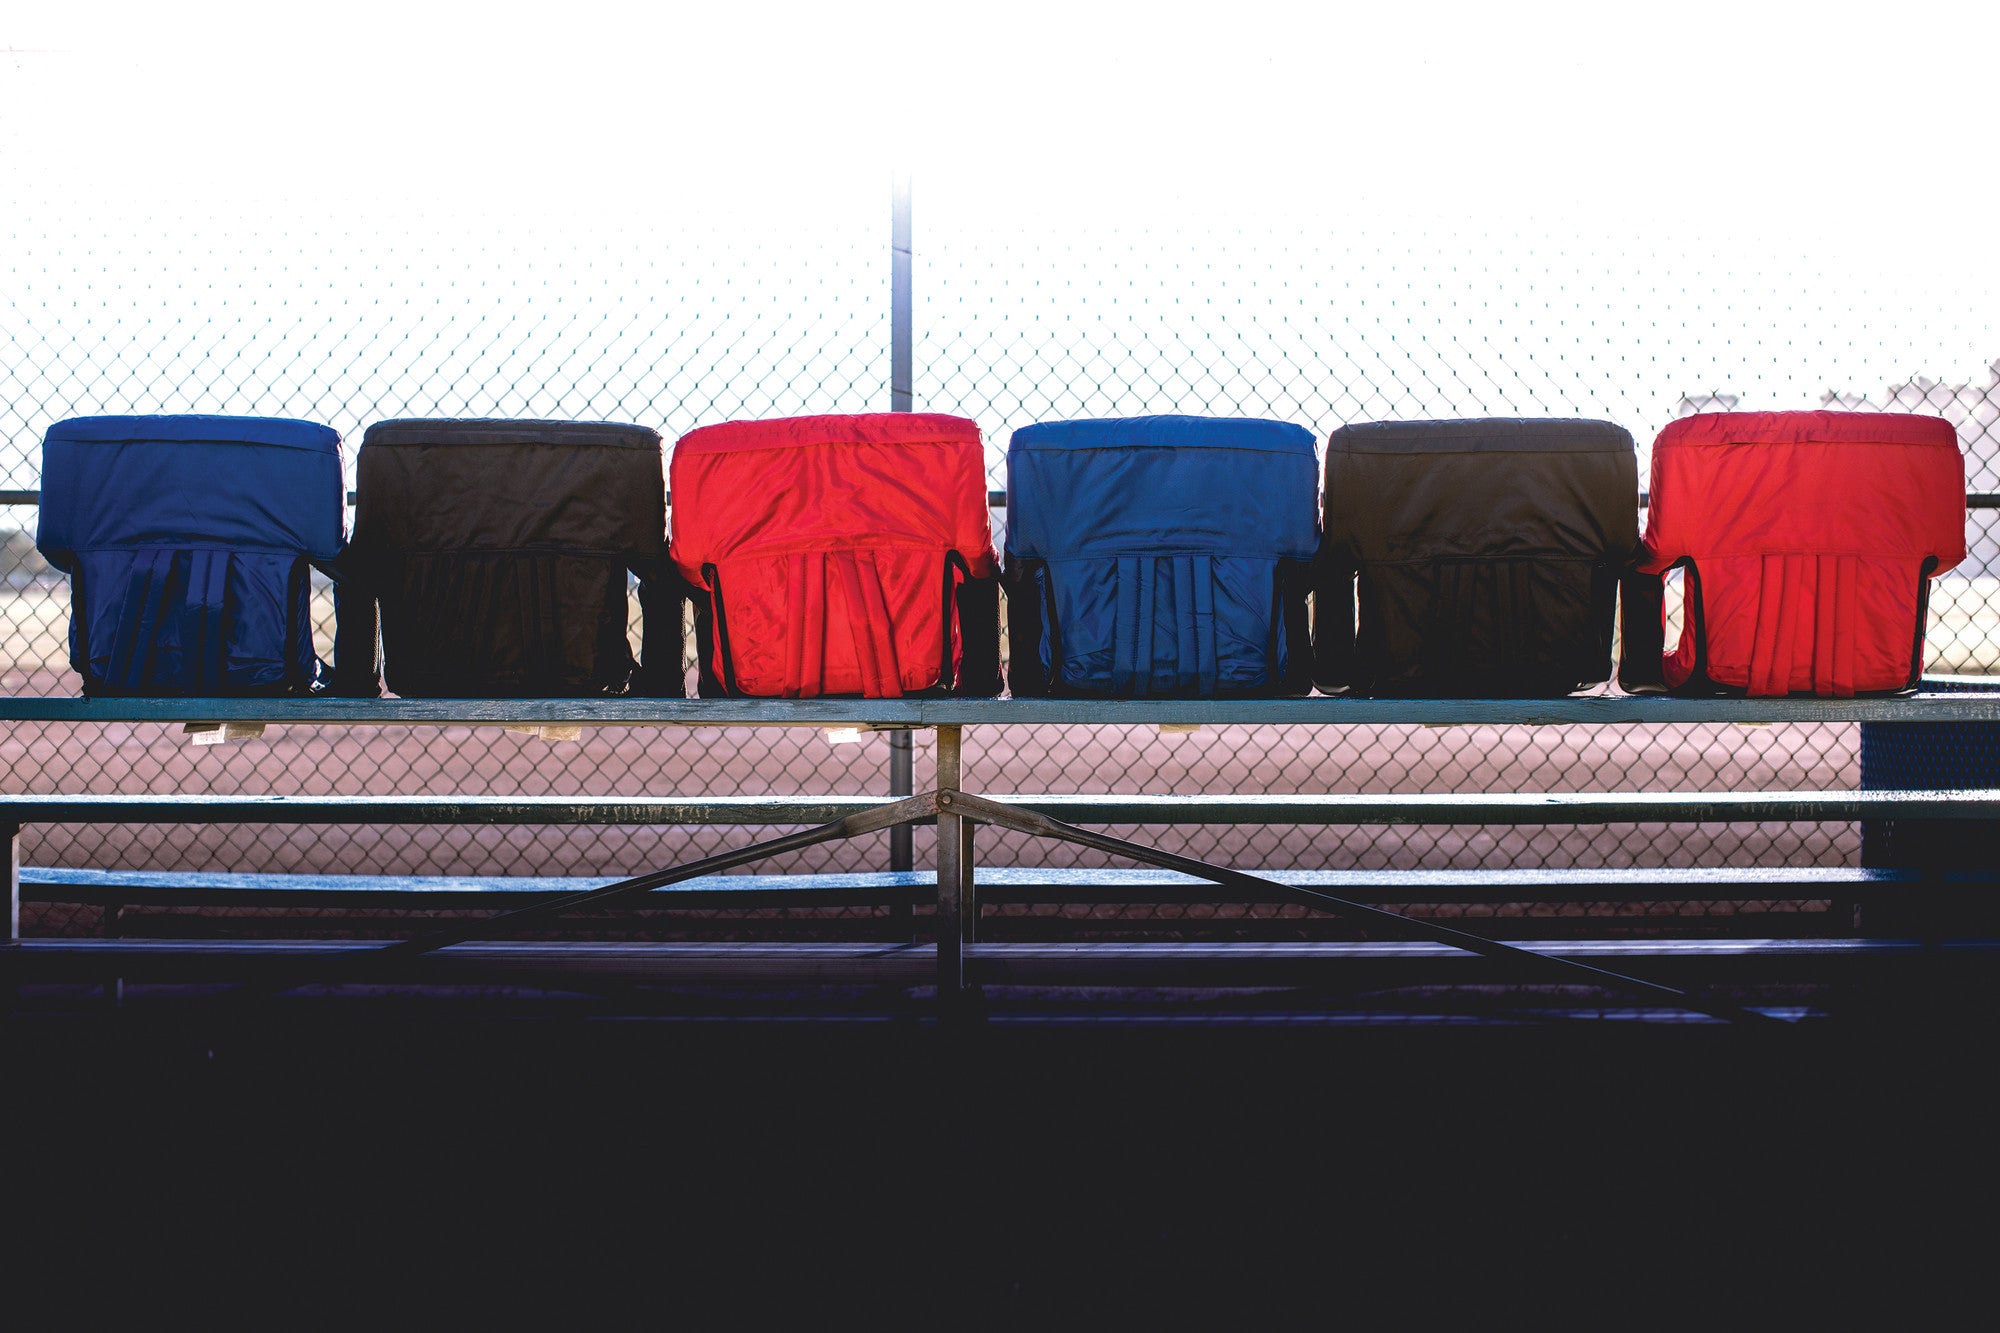 Texas Rangers - Ventura Portable Reclining Stadium Seat